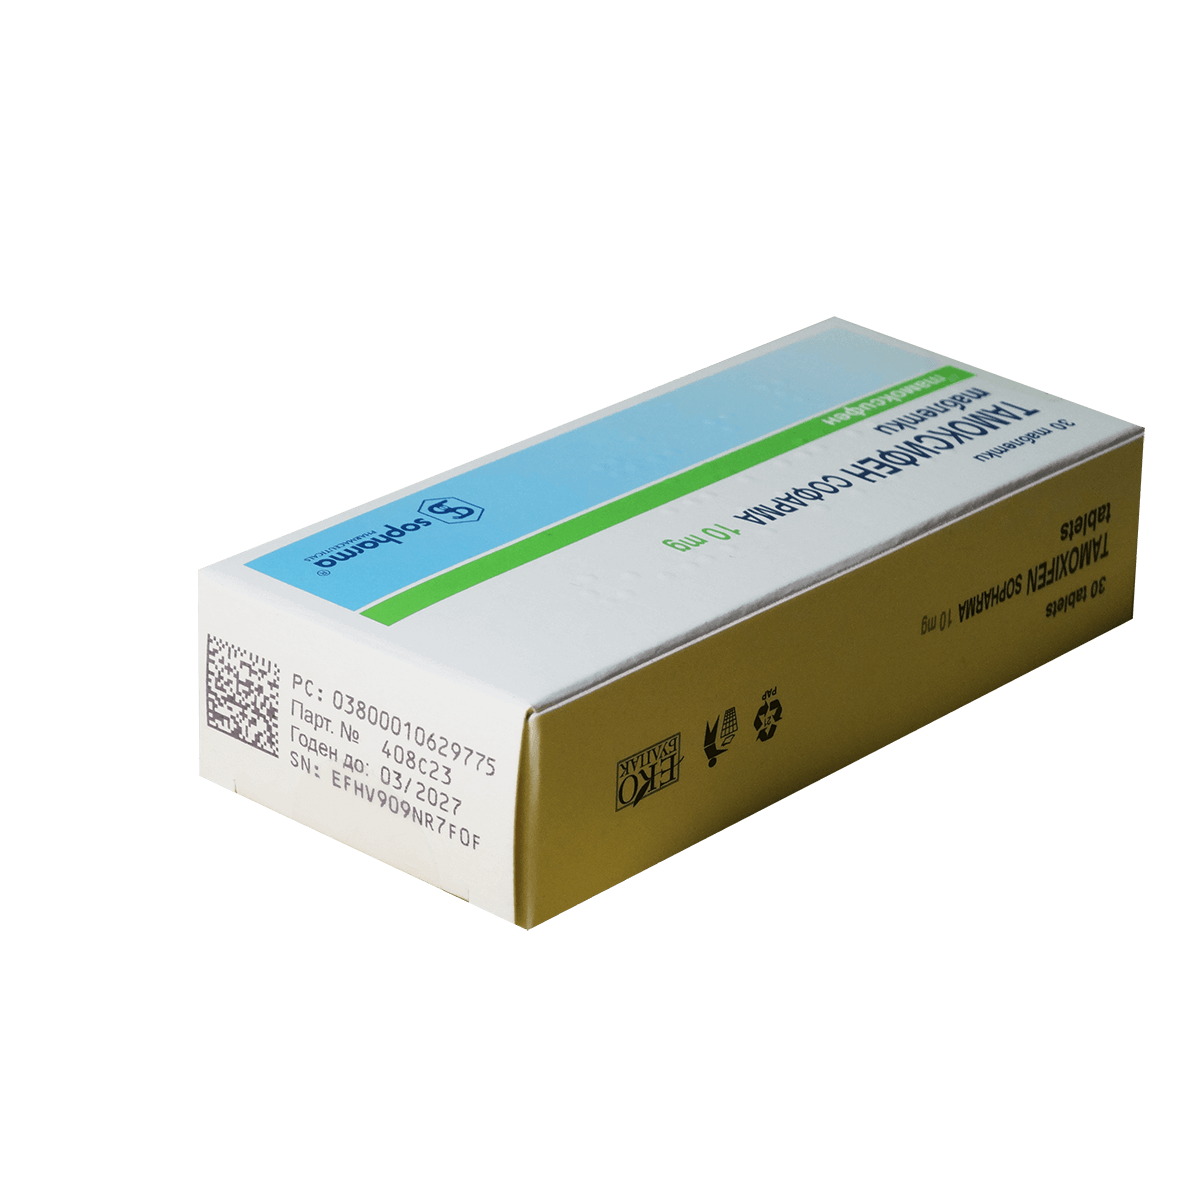 Tamoxifen-tablets-10mg-antiestrogen-nolvadex-muscle-hunter-xsf-group